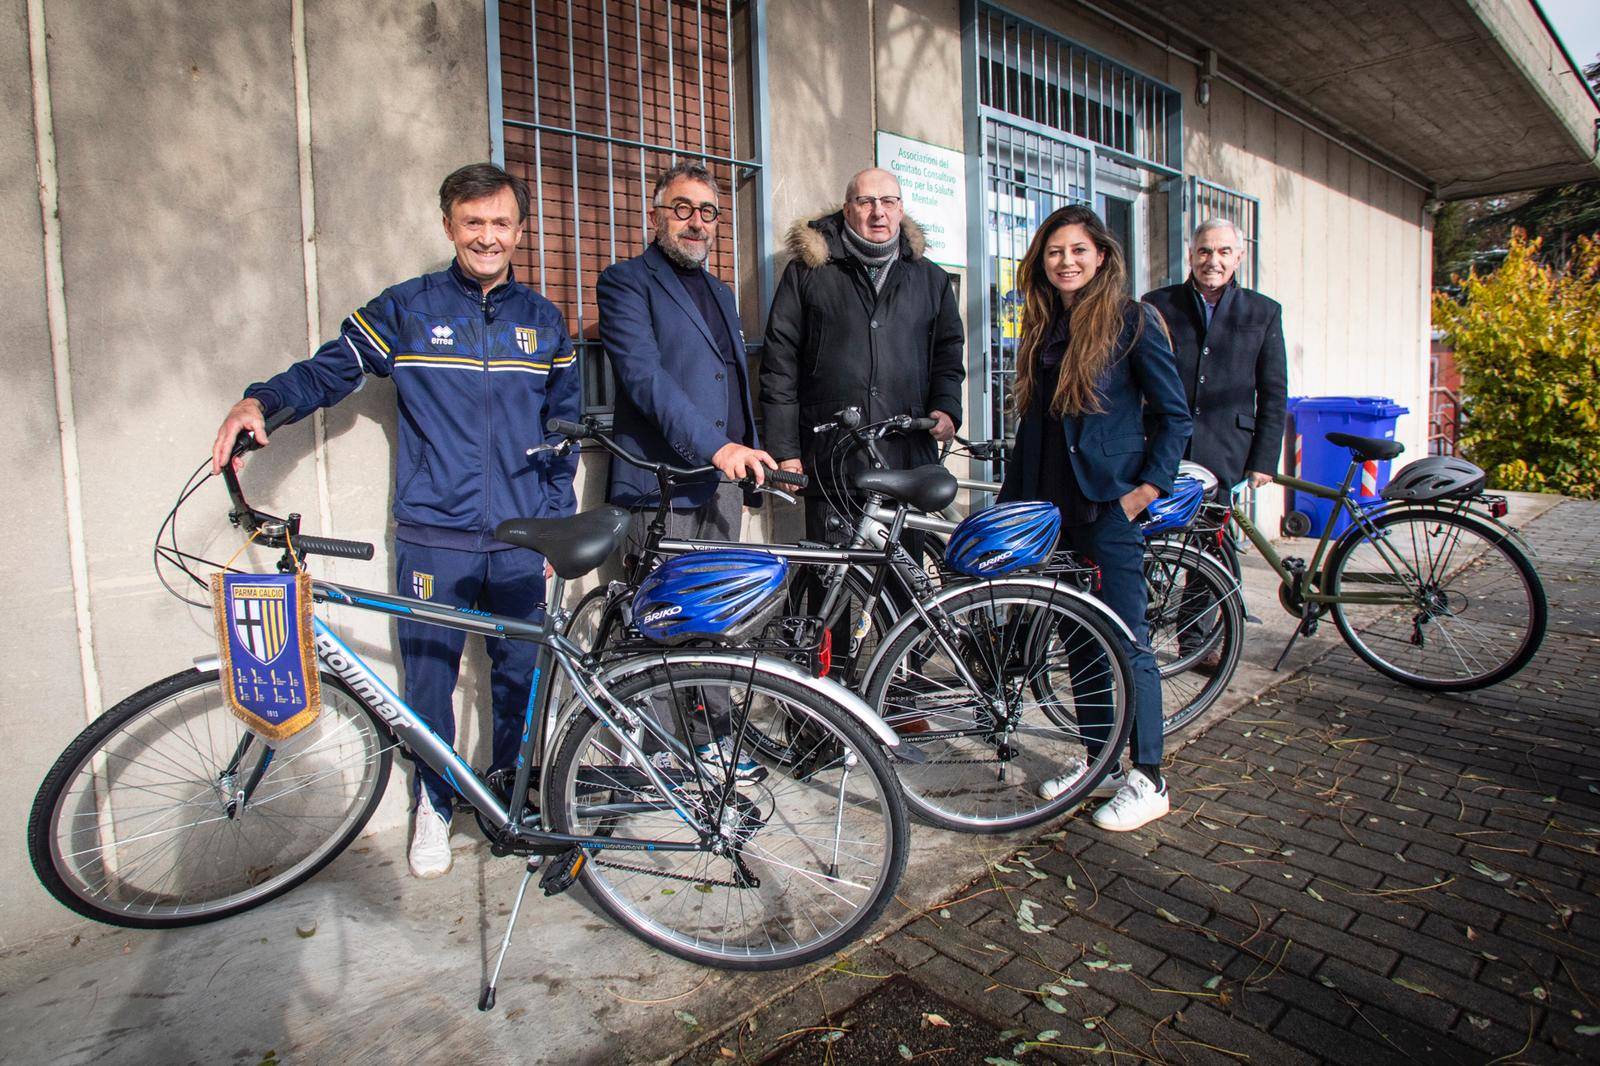 lions ducale dona cinque biciclette al parma special va pensiero